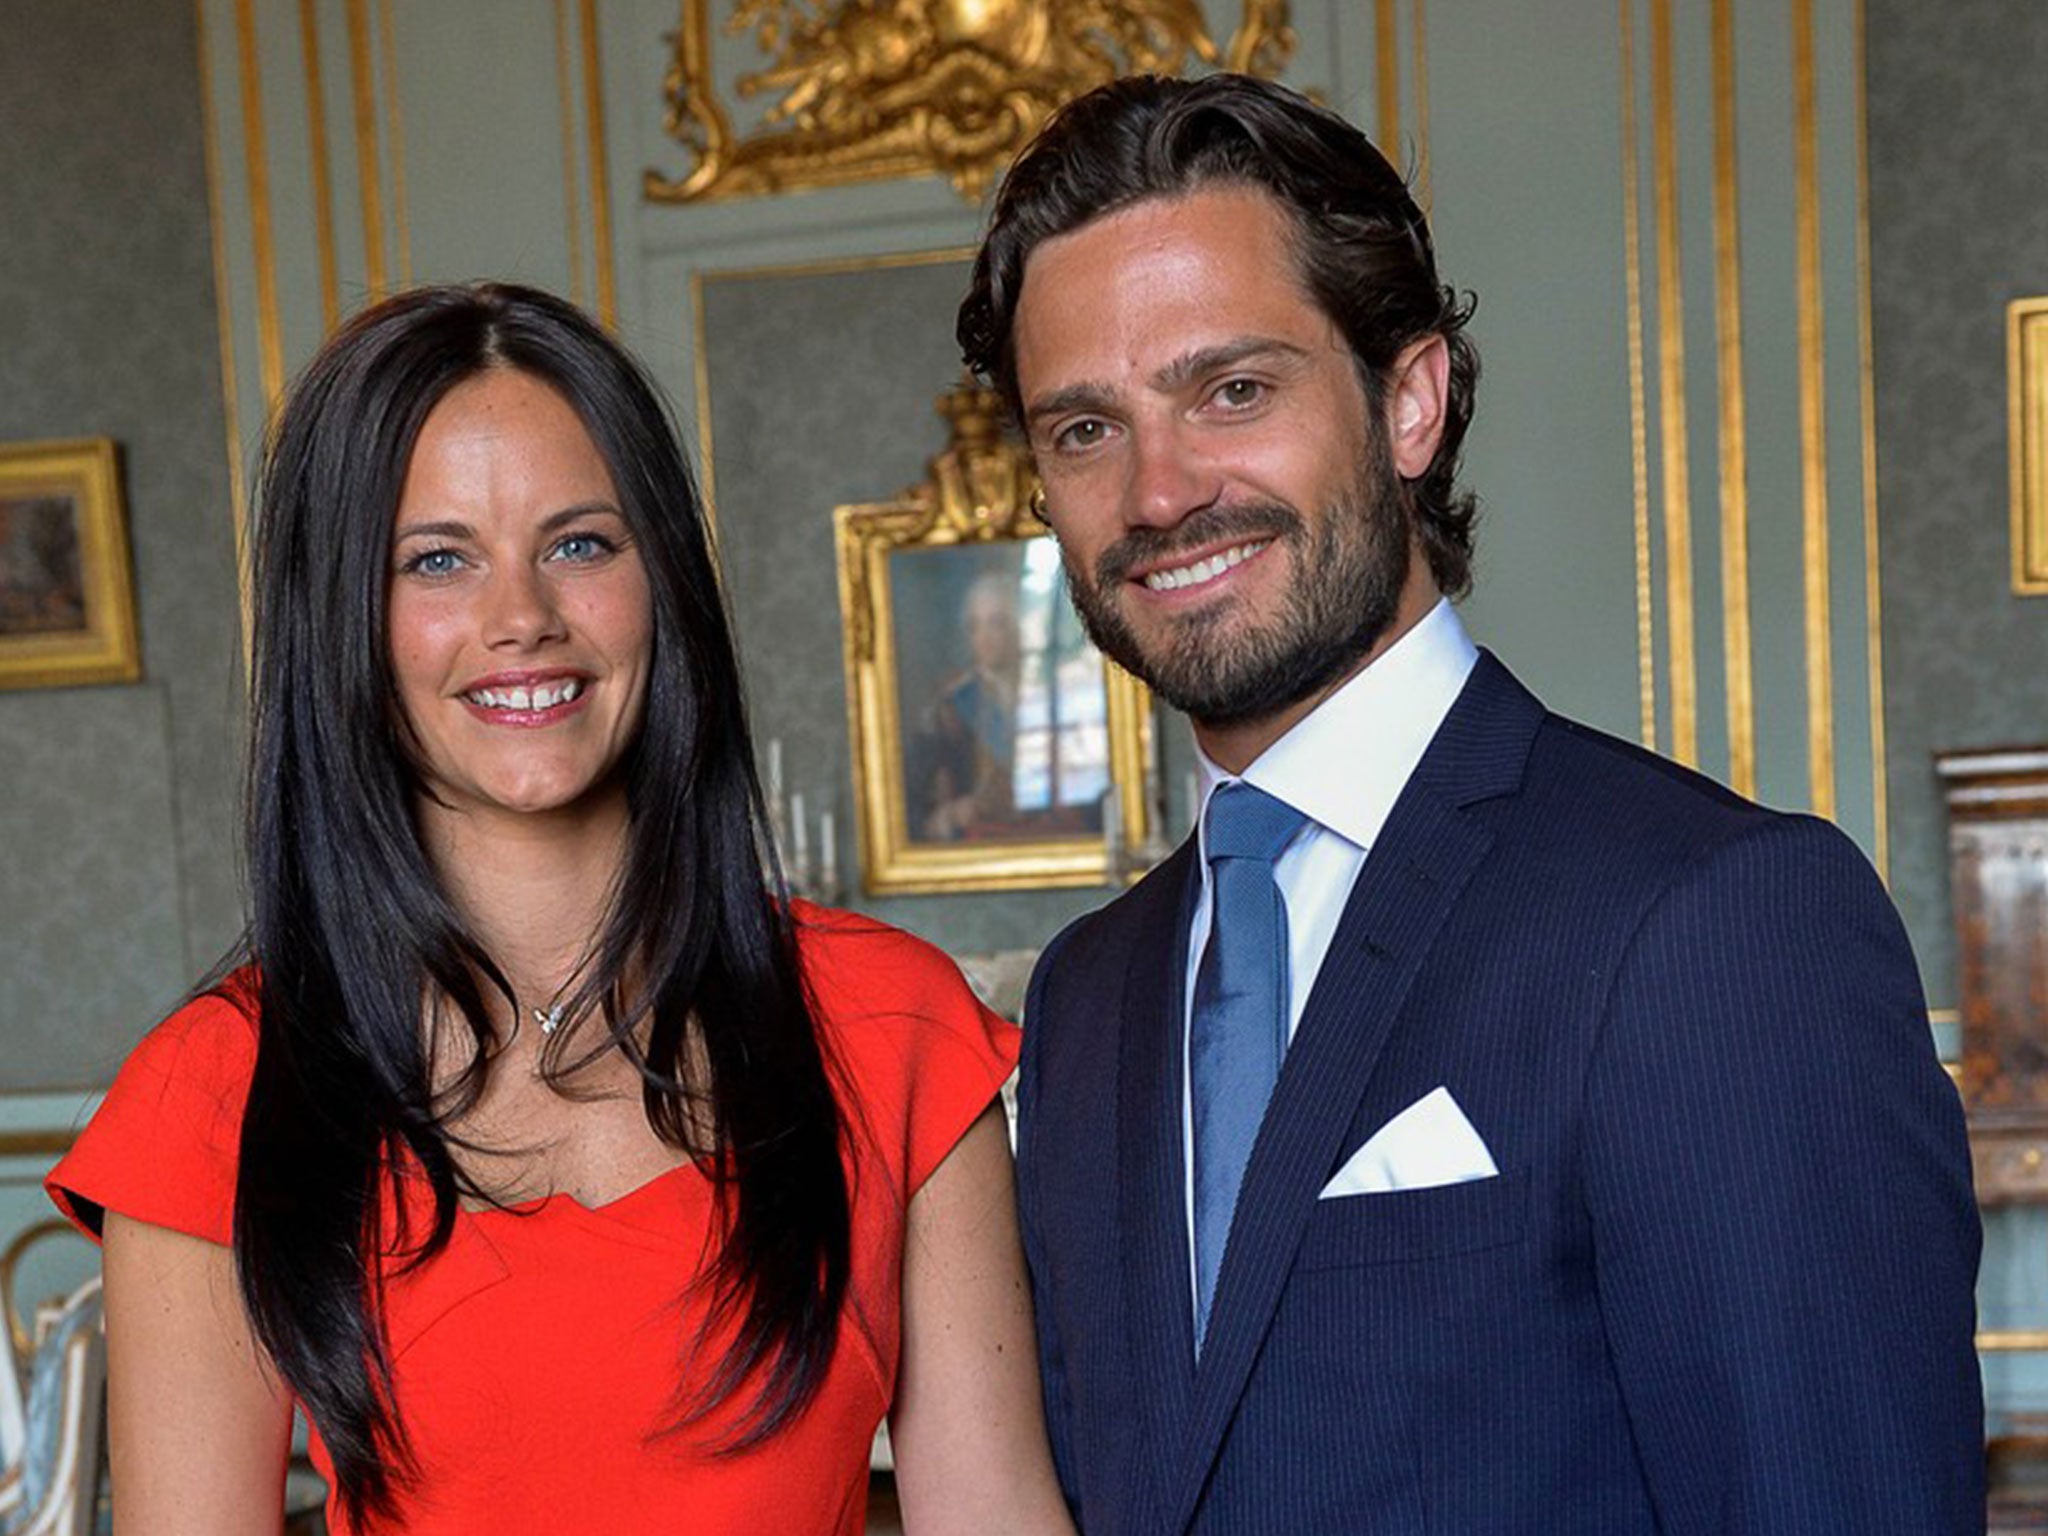 Prince Carl Philip of Sweden and fiancee Sofia Hellqvist